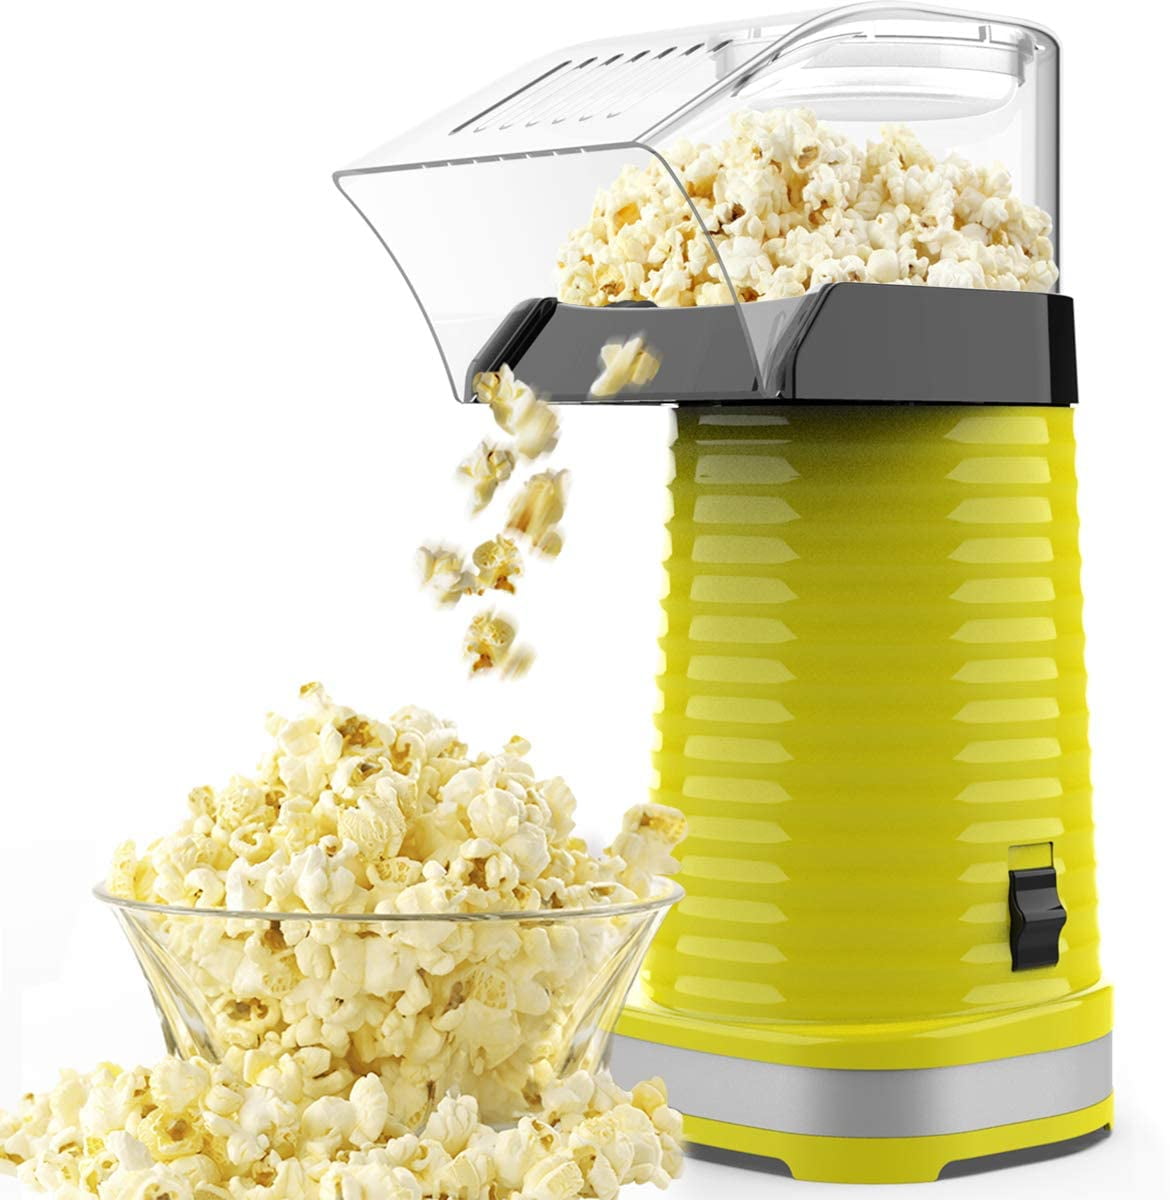 BillionPool POP-A Popcorn Machine, 1200W Popcorn Maker, BPA-Free